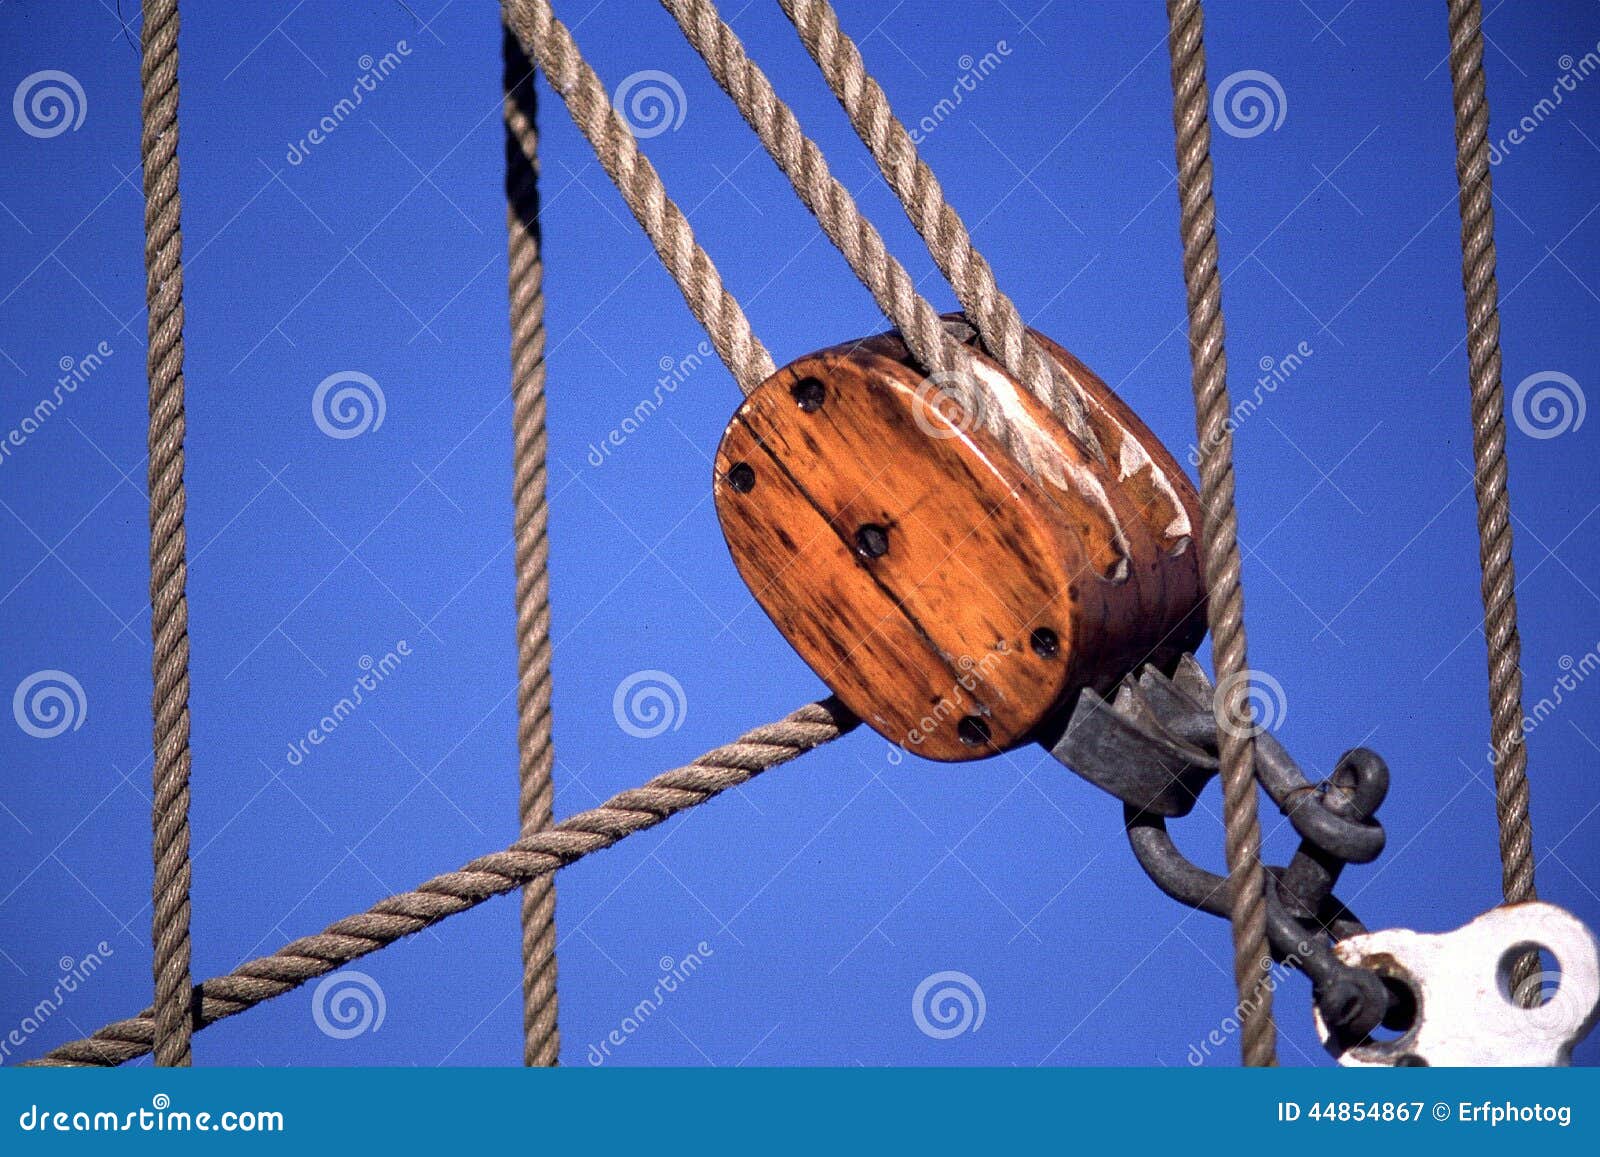 Sailing Ship Ropes And Pulley Stock Image - Image: 44854867